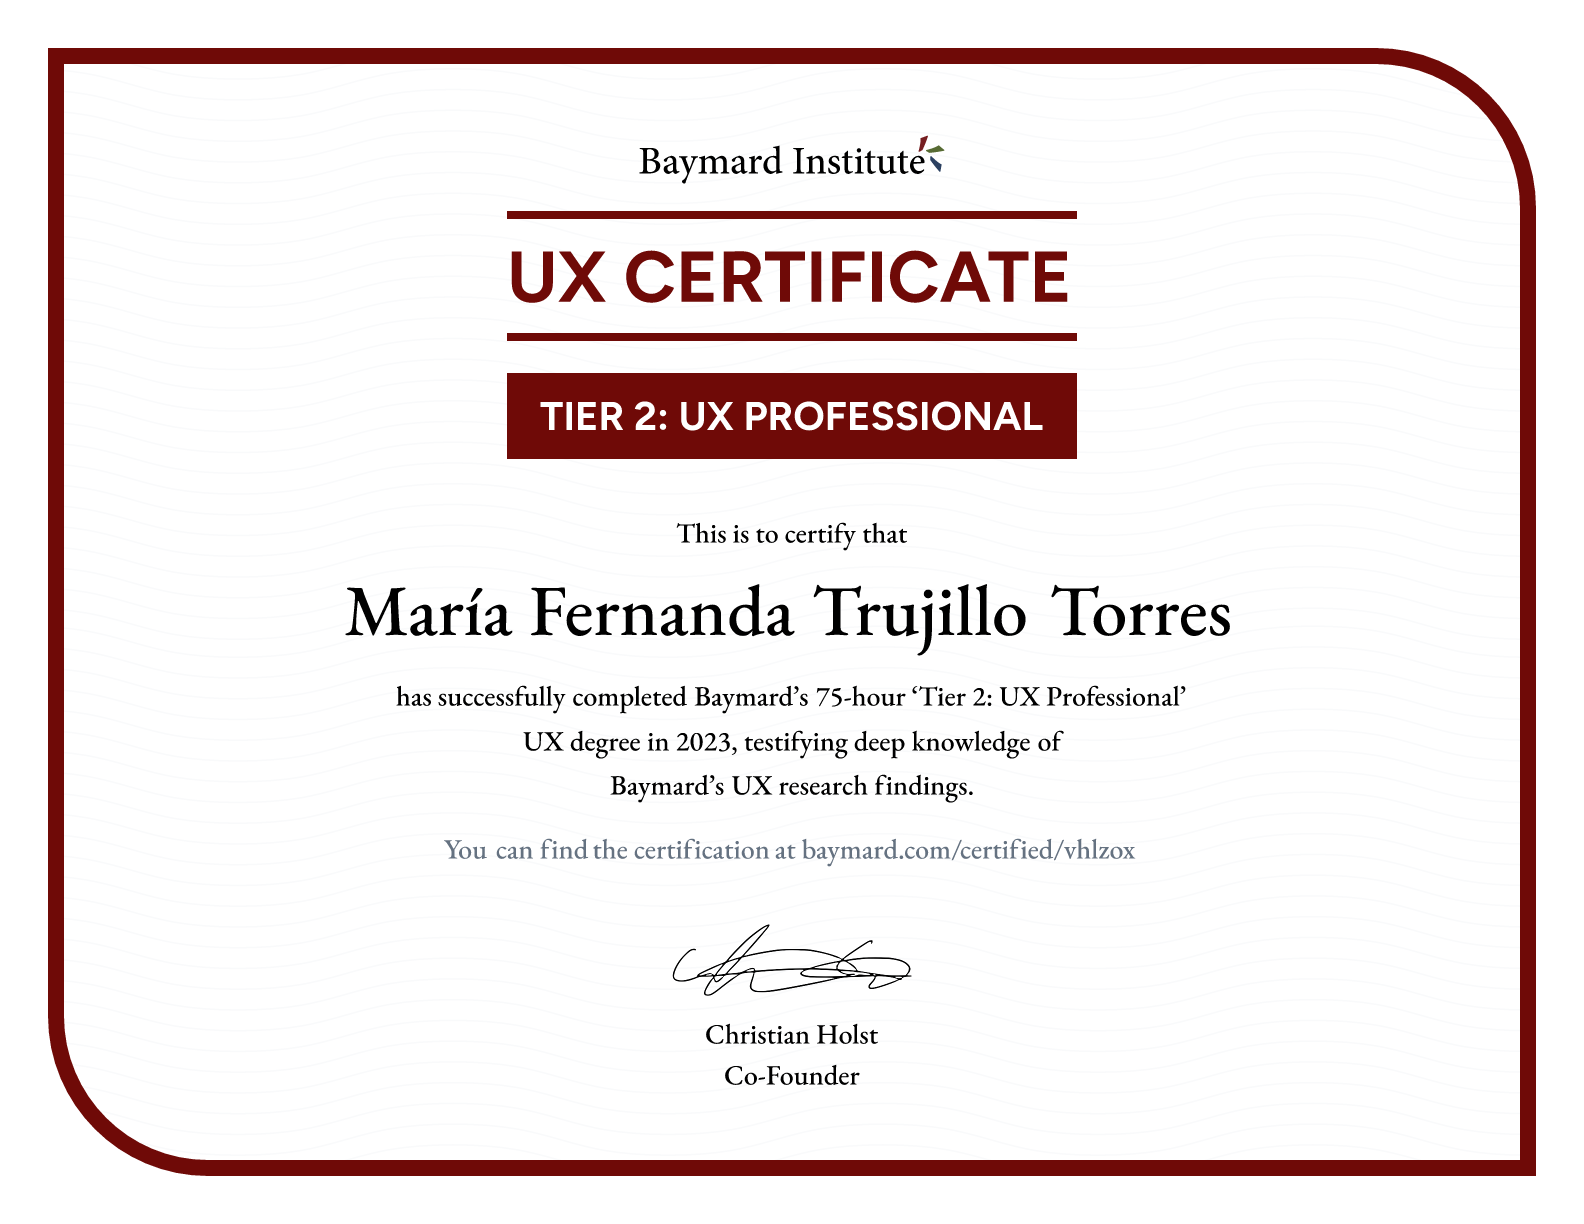 María Fernanda Trujillo Torres’s certificate